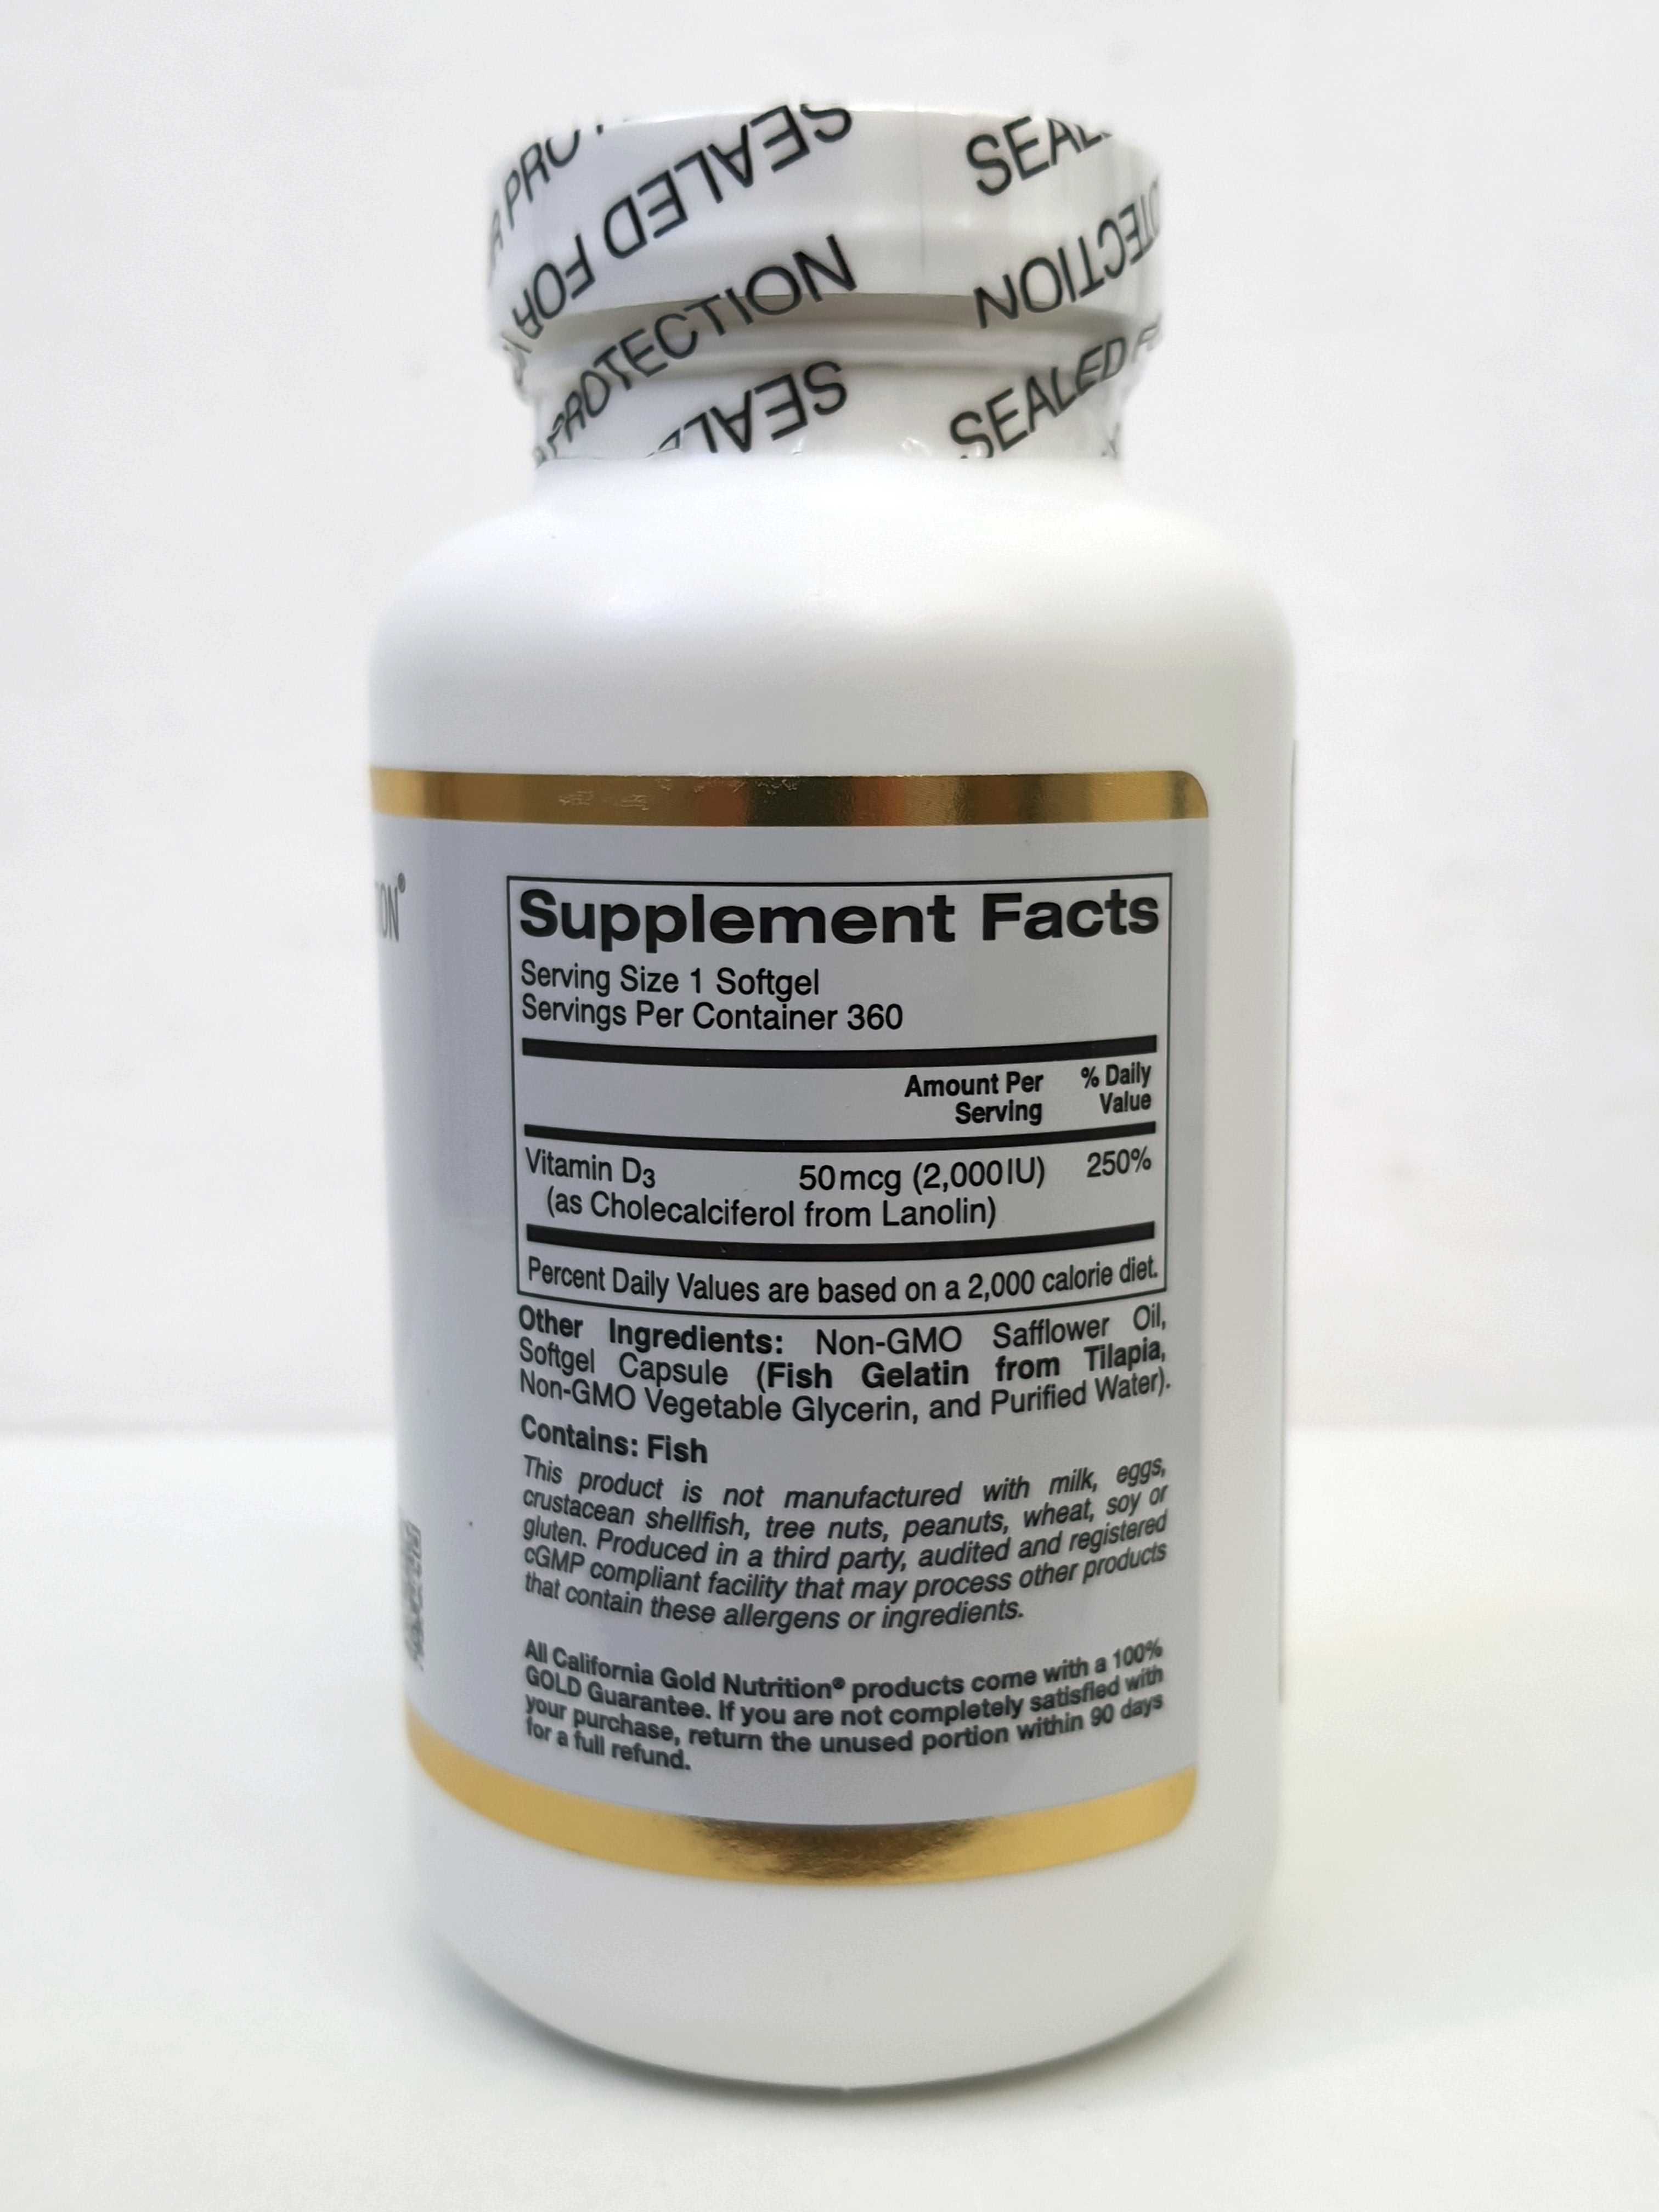 Витамин D3 California Gold Nutrition, 2000 МЕ, 360 капсул